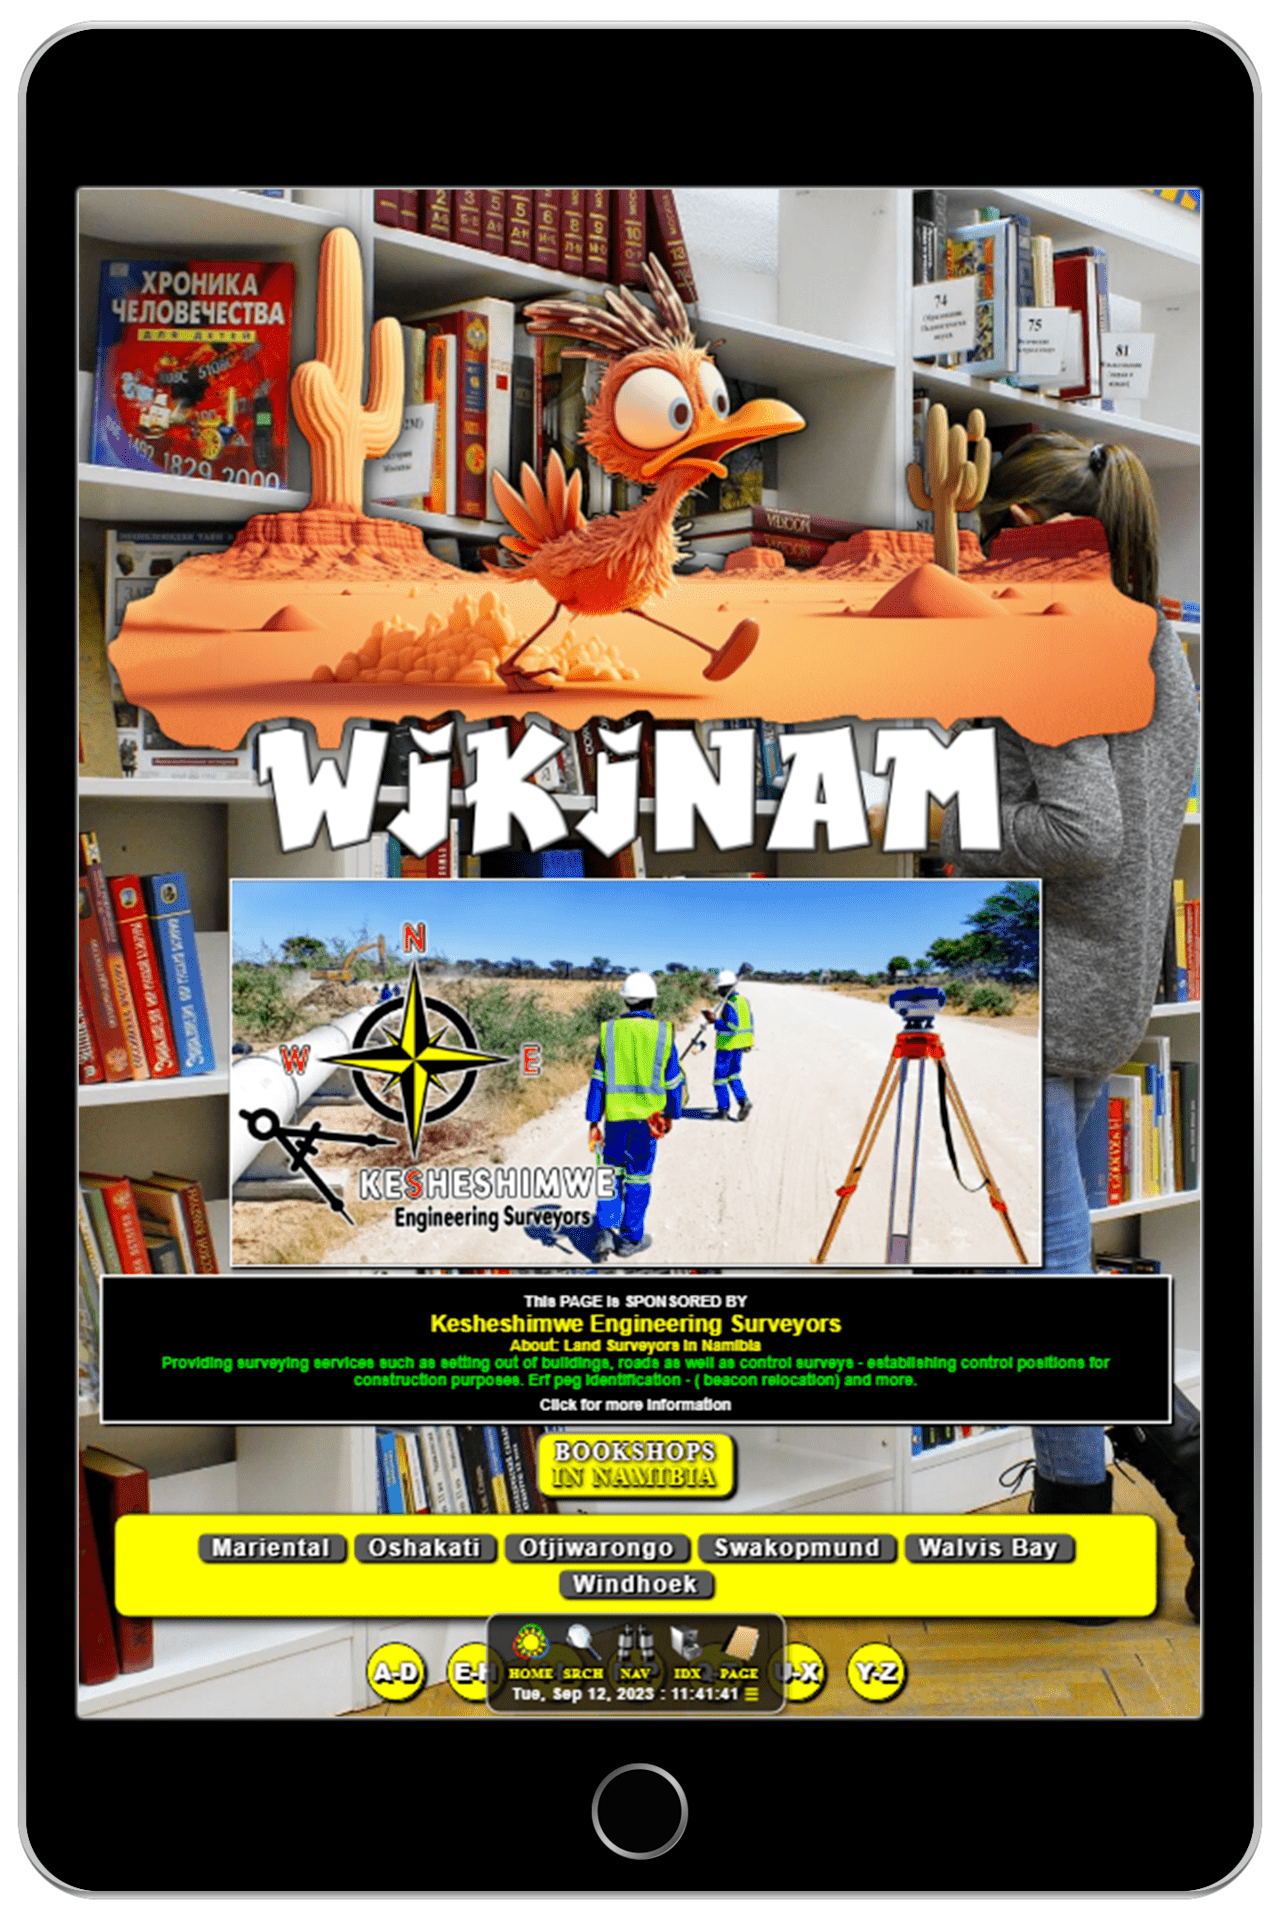 wikinam-index.png